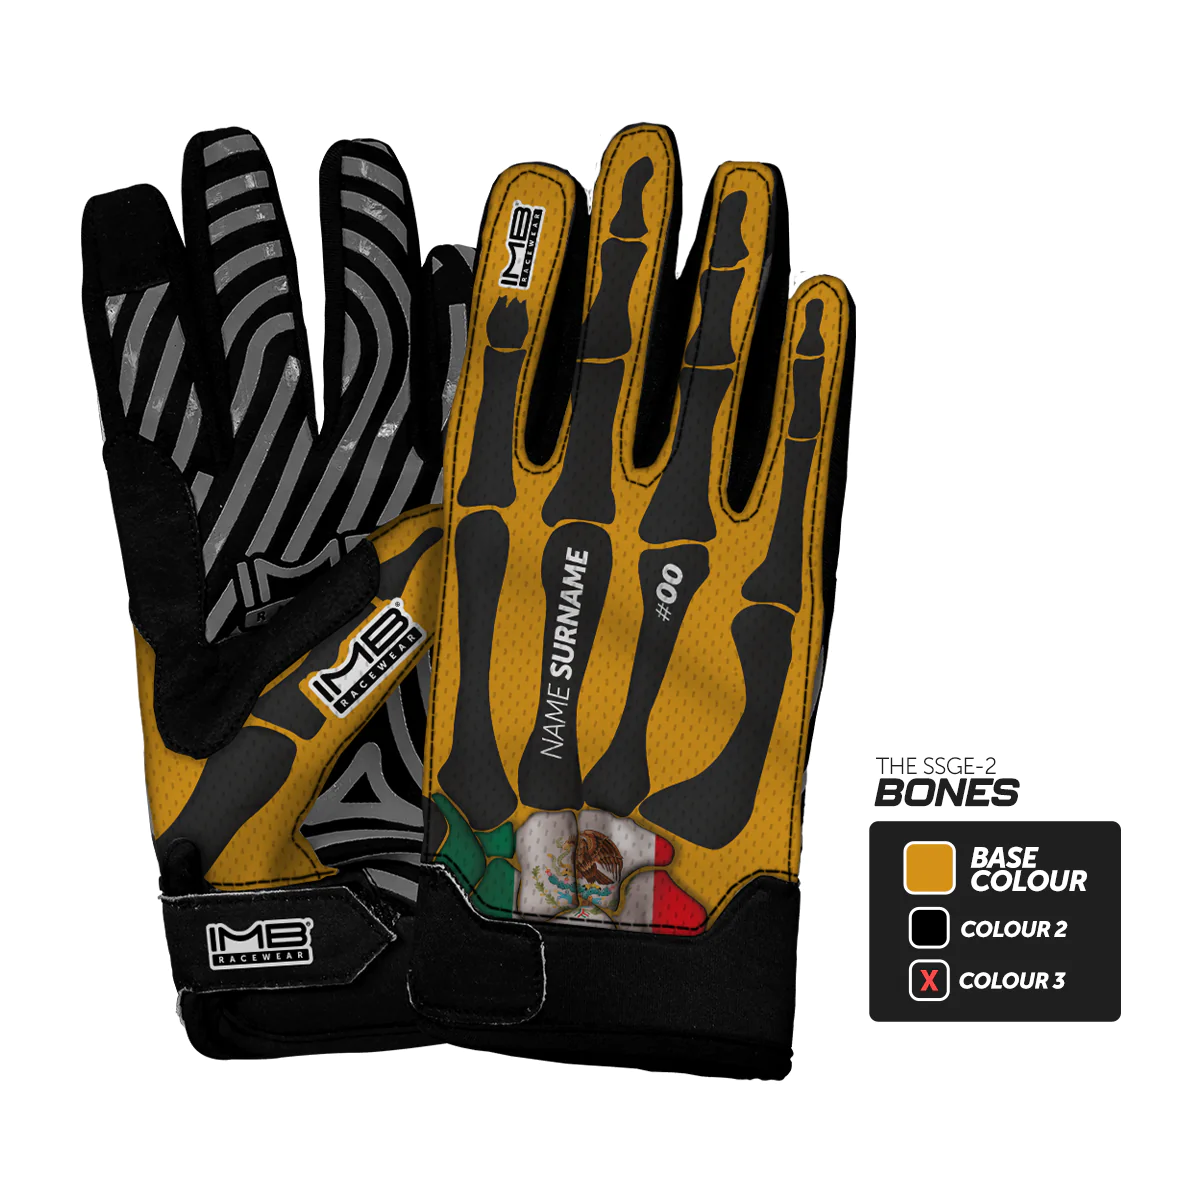 The Bones SSGE-2 Short Sim Racing Gloves